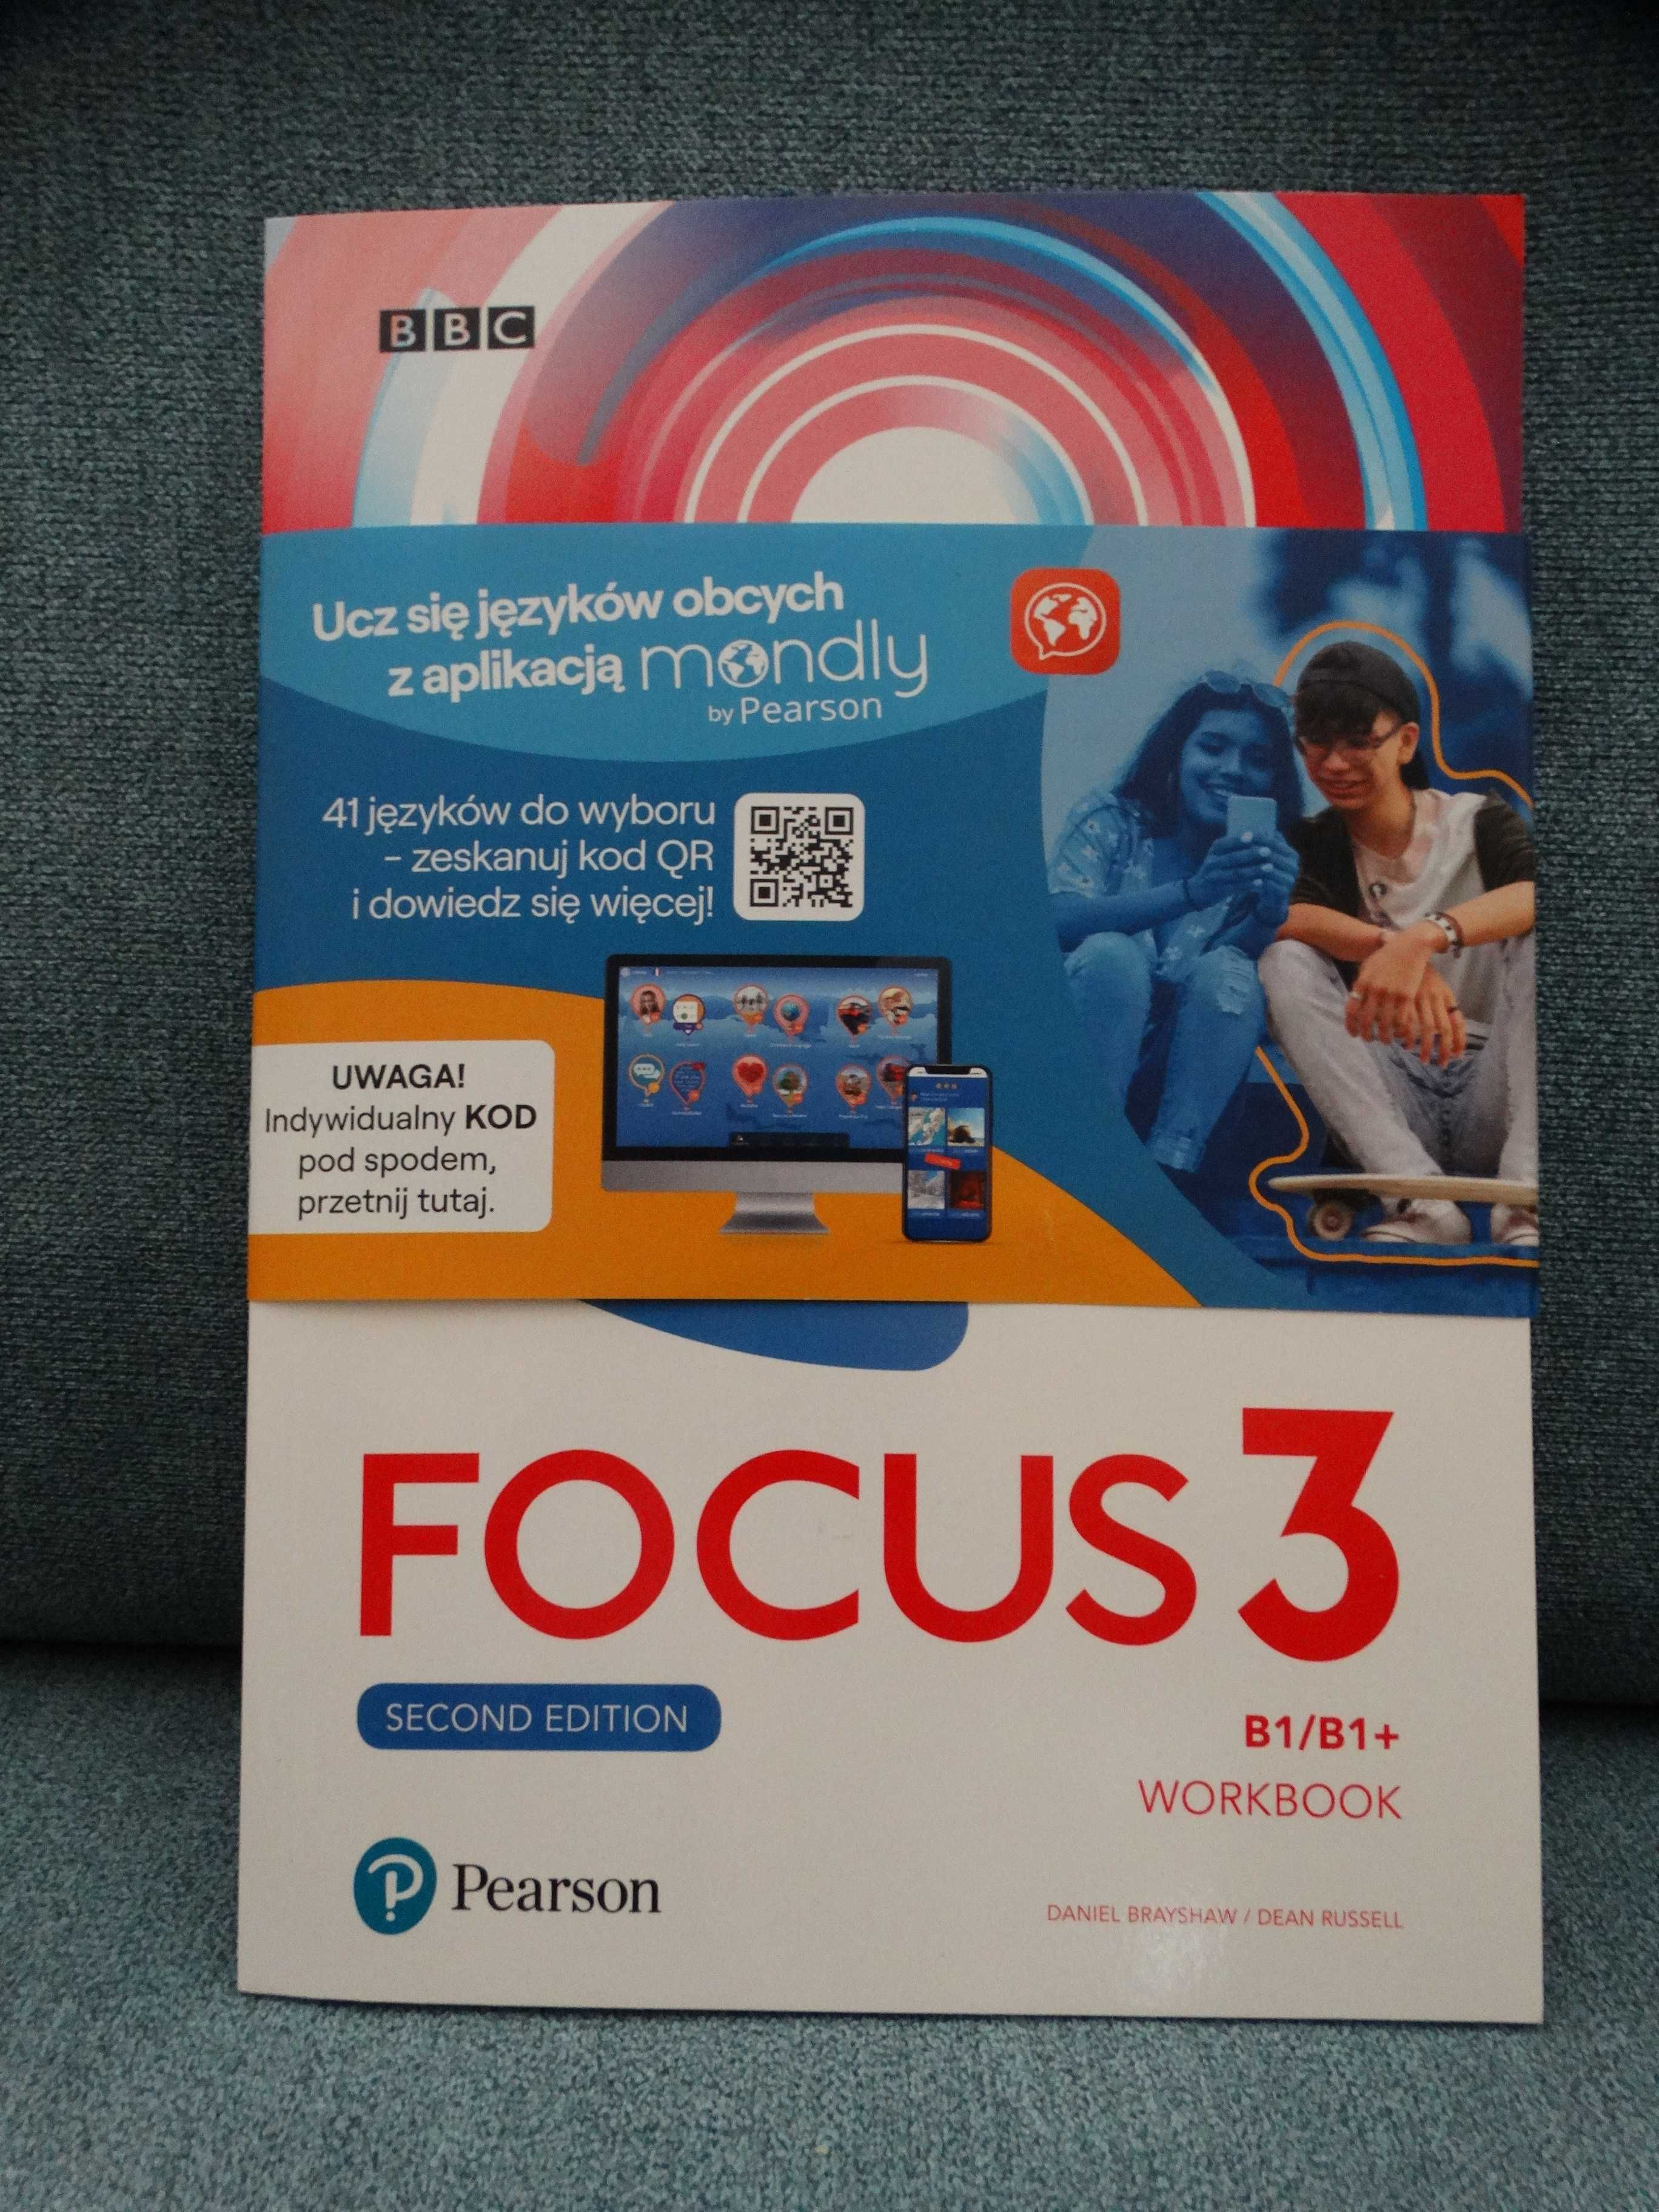 Focus 3 second edition